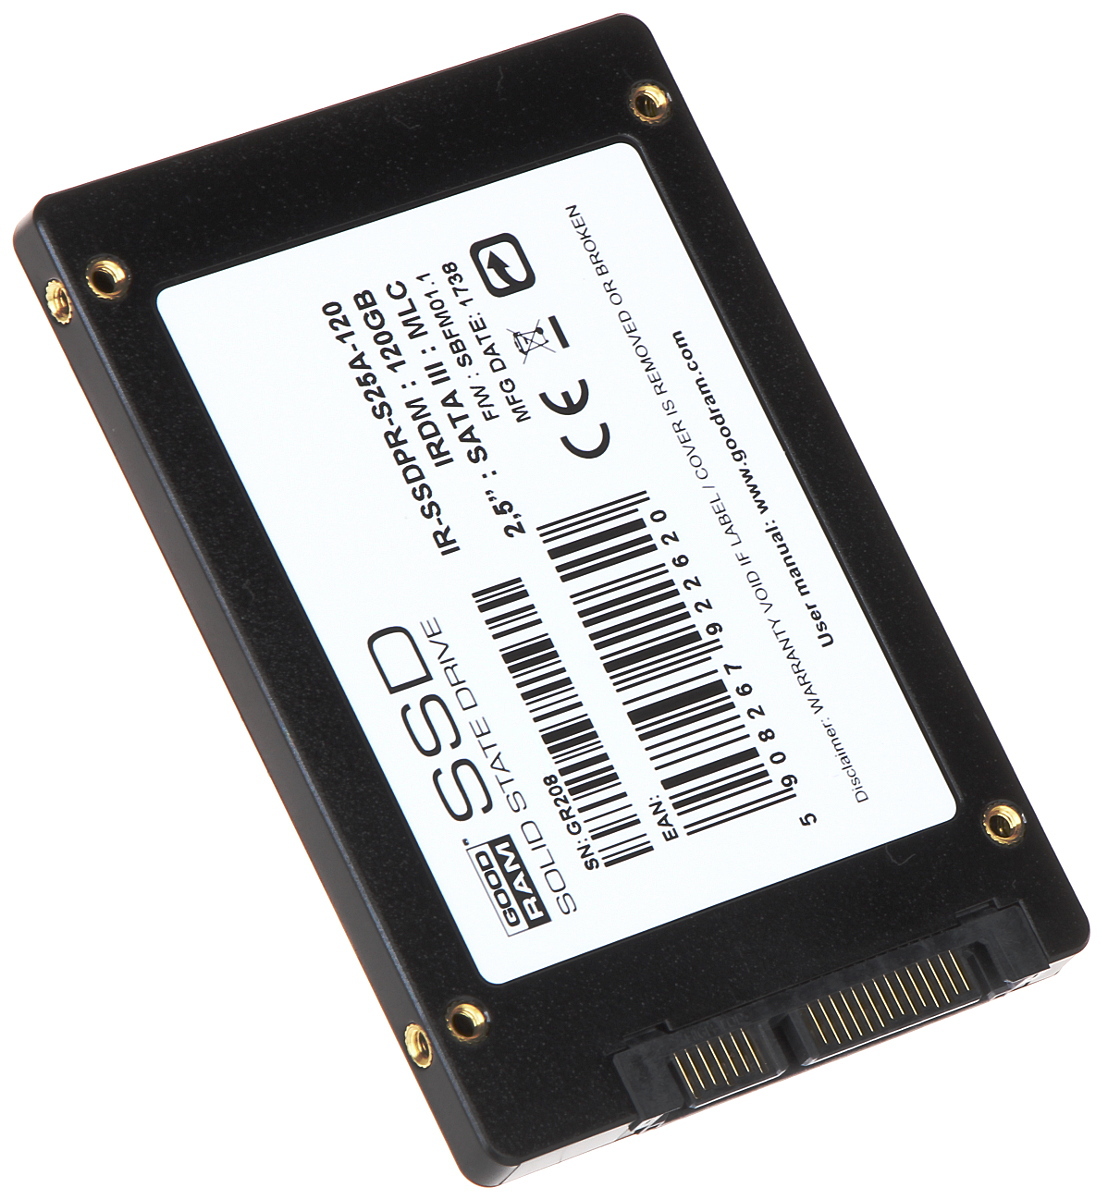 HDD FOR DVR SSD-PR-S25A-120GB GOODRAM - SATA SSDs - Delta